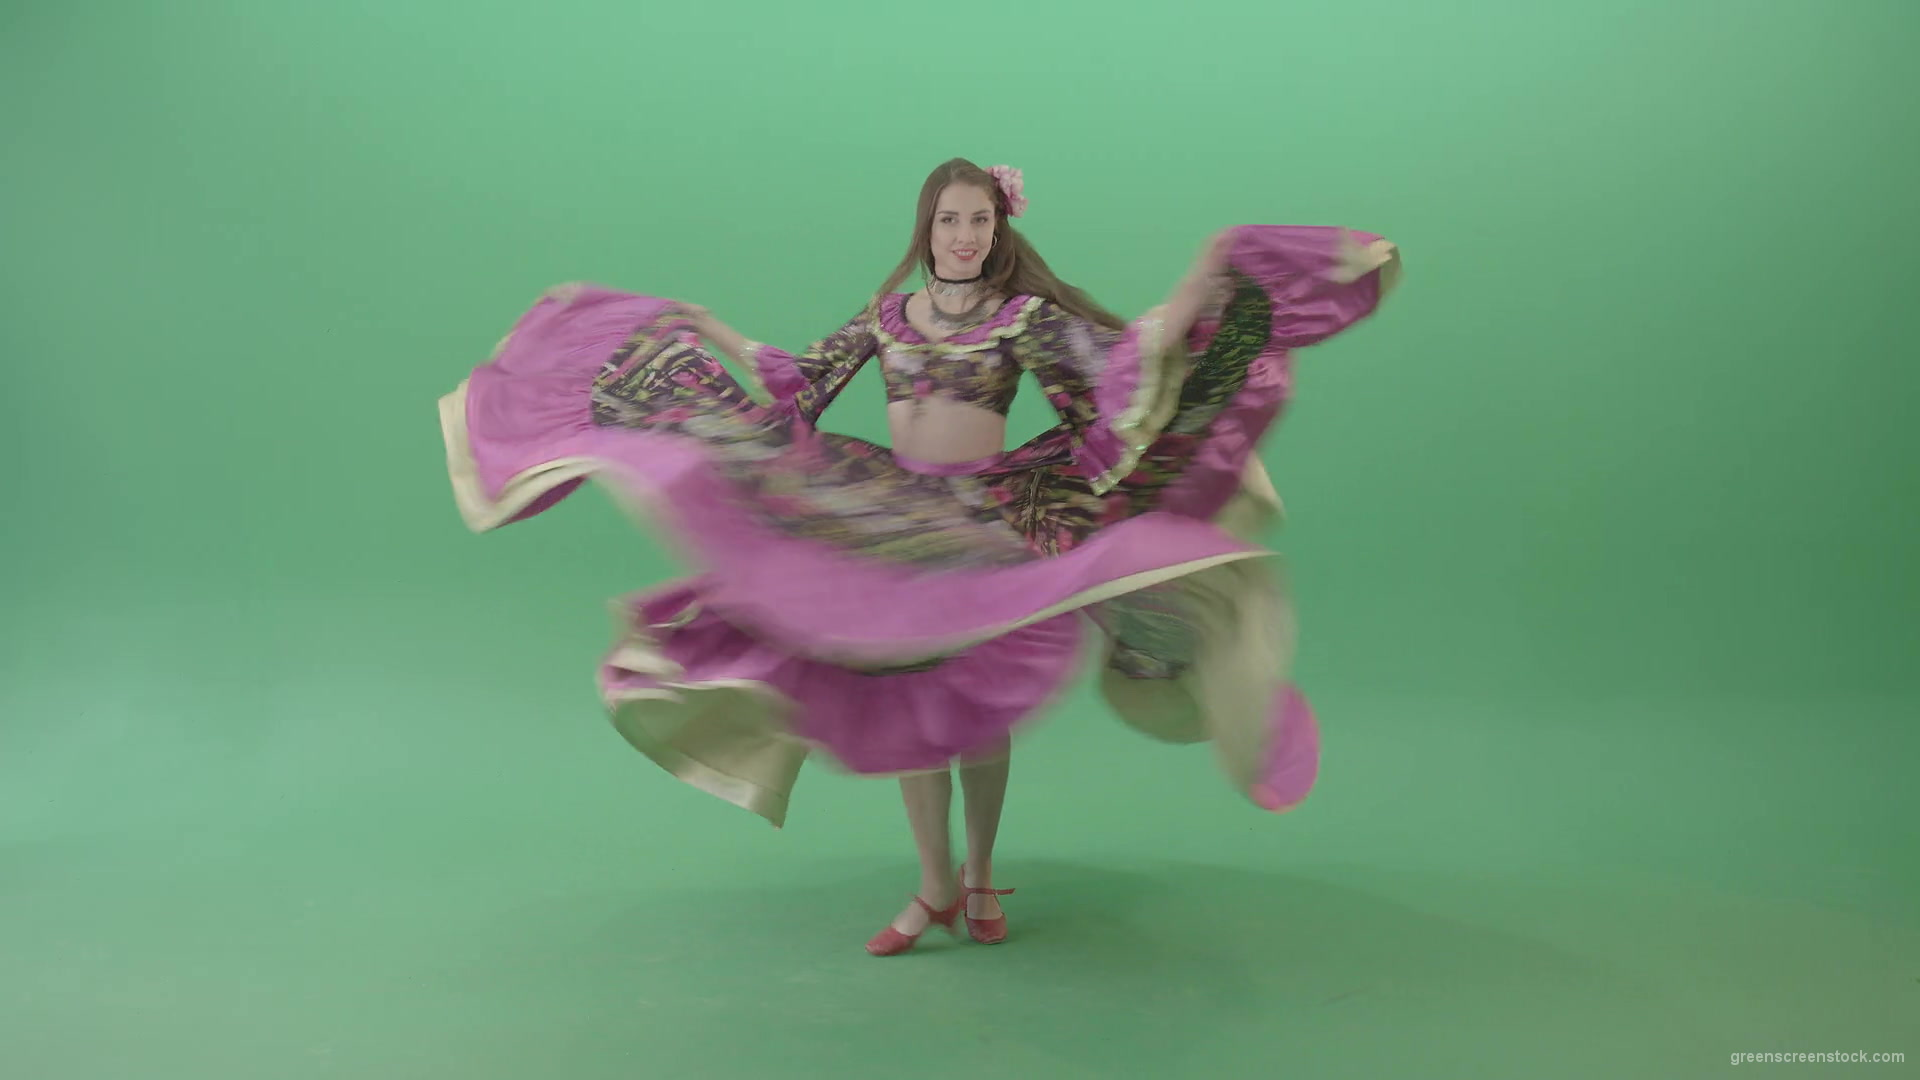 Elegant-Tzigane-romana-gypsy-balkan-women-spining-pink-dress-dancing-folk-isolated-in-green-screen-studio-4K-Green-Screen-Video-Footage-1920_009 Green Screen Stock